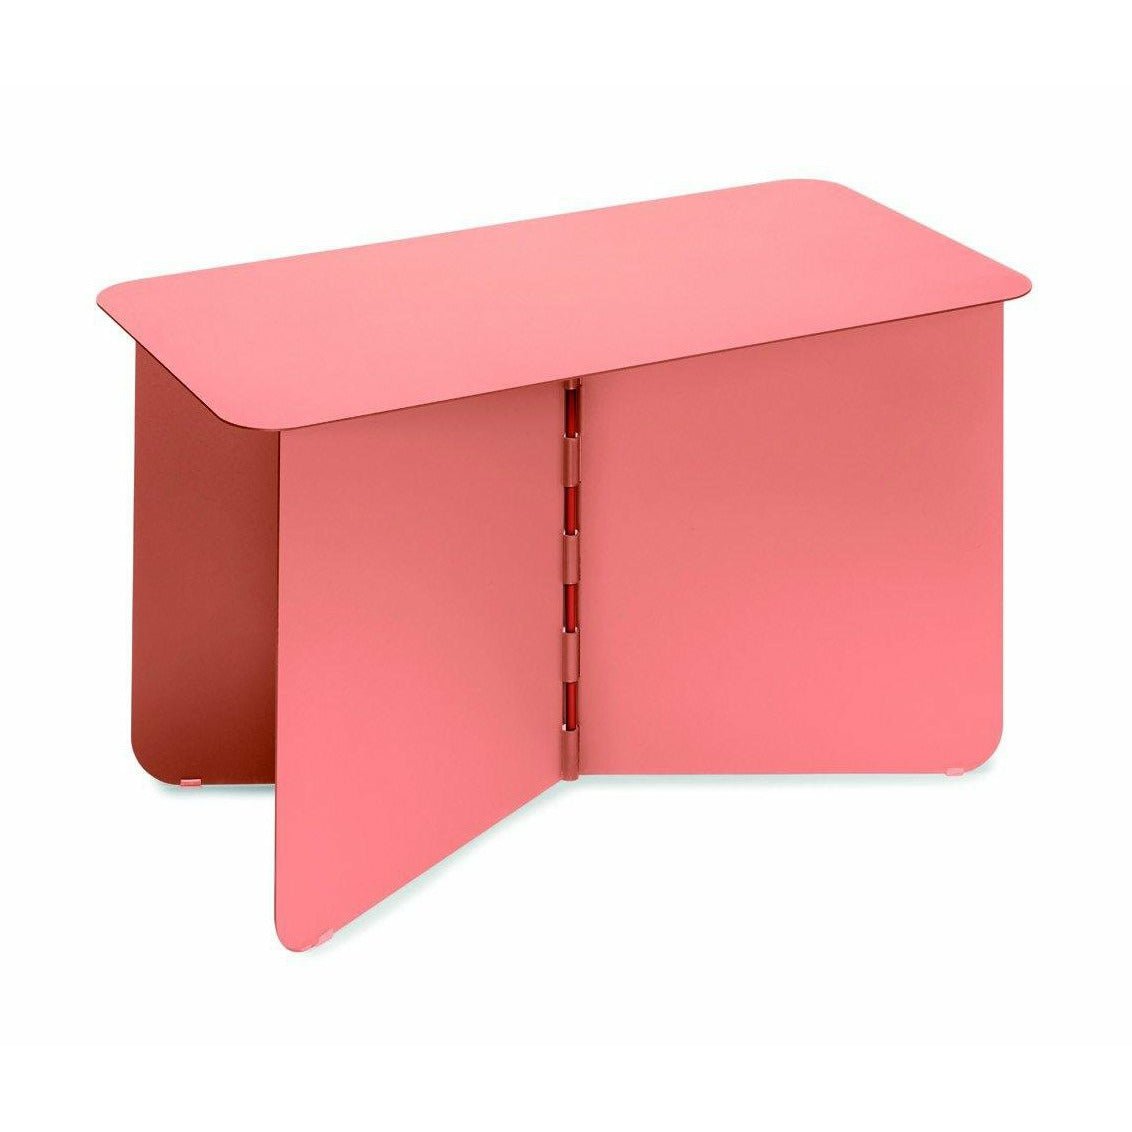 Puik Scharnier sidetabel 70x35cm, roze